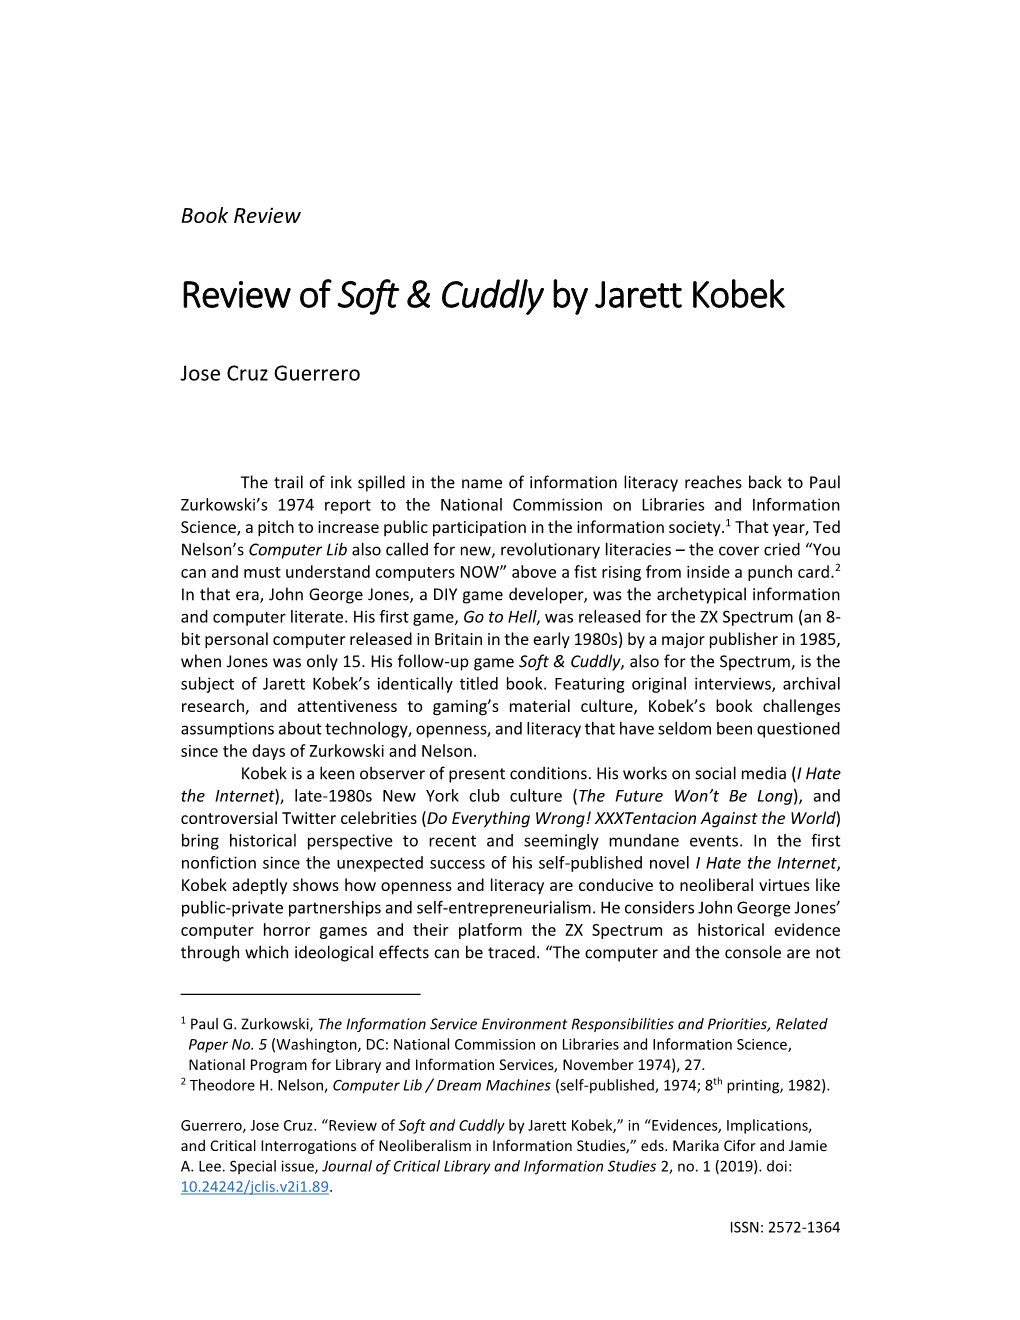 Review of Soft & Cuddly by Jarett Kobek